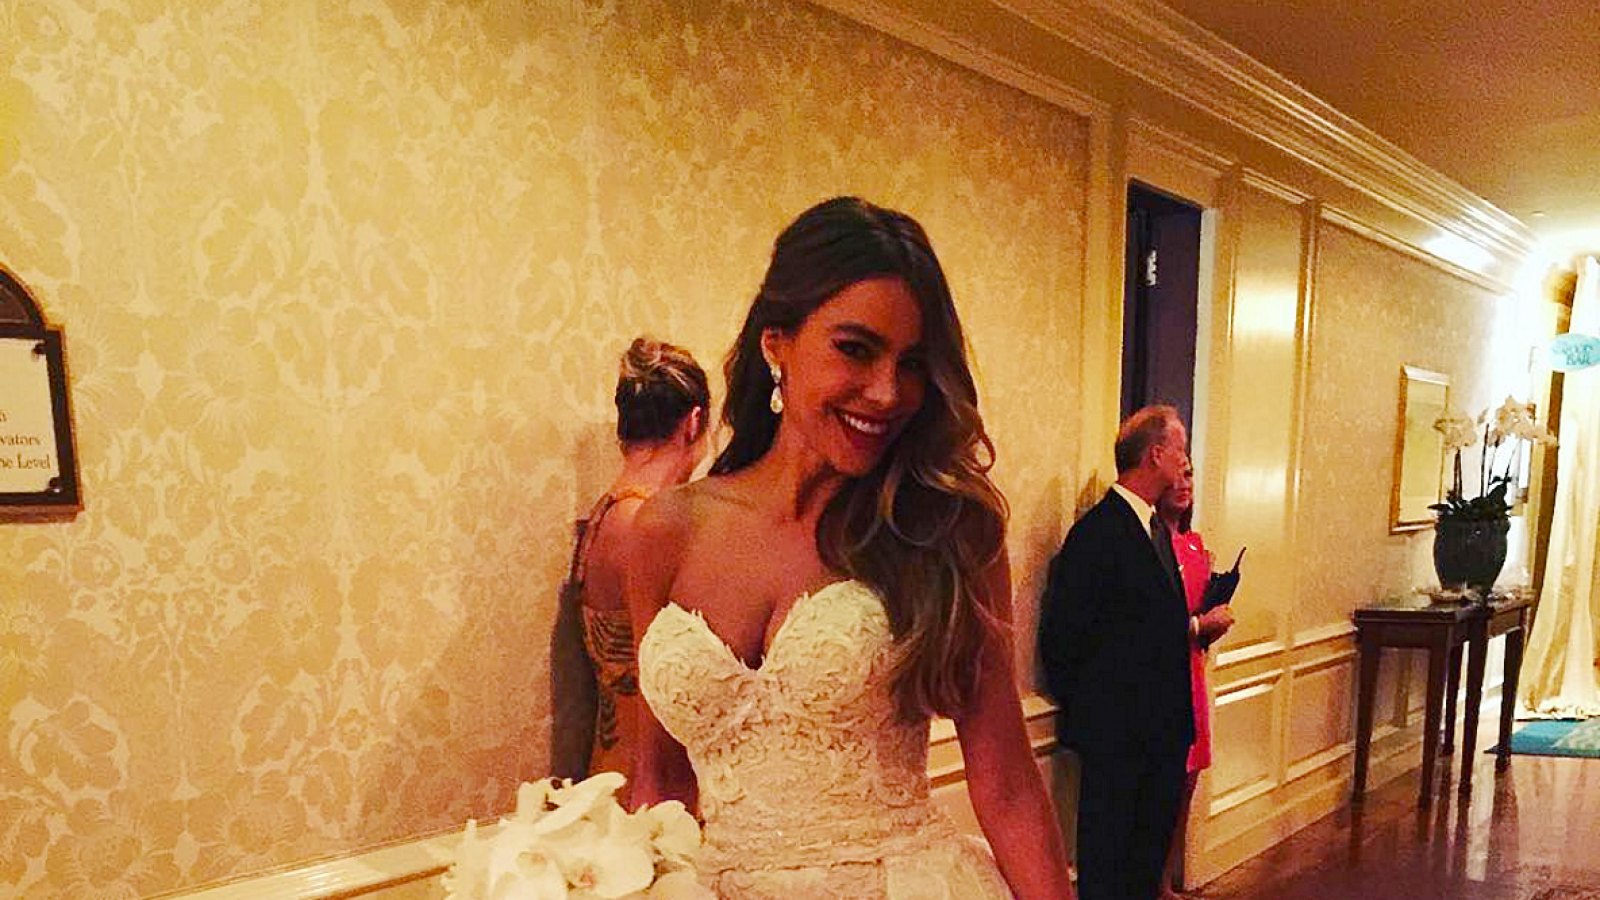 Sofia Vergara in her wedding dress